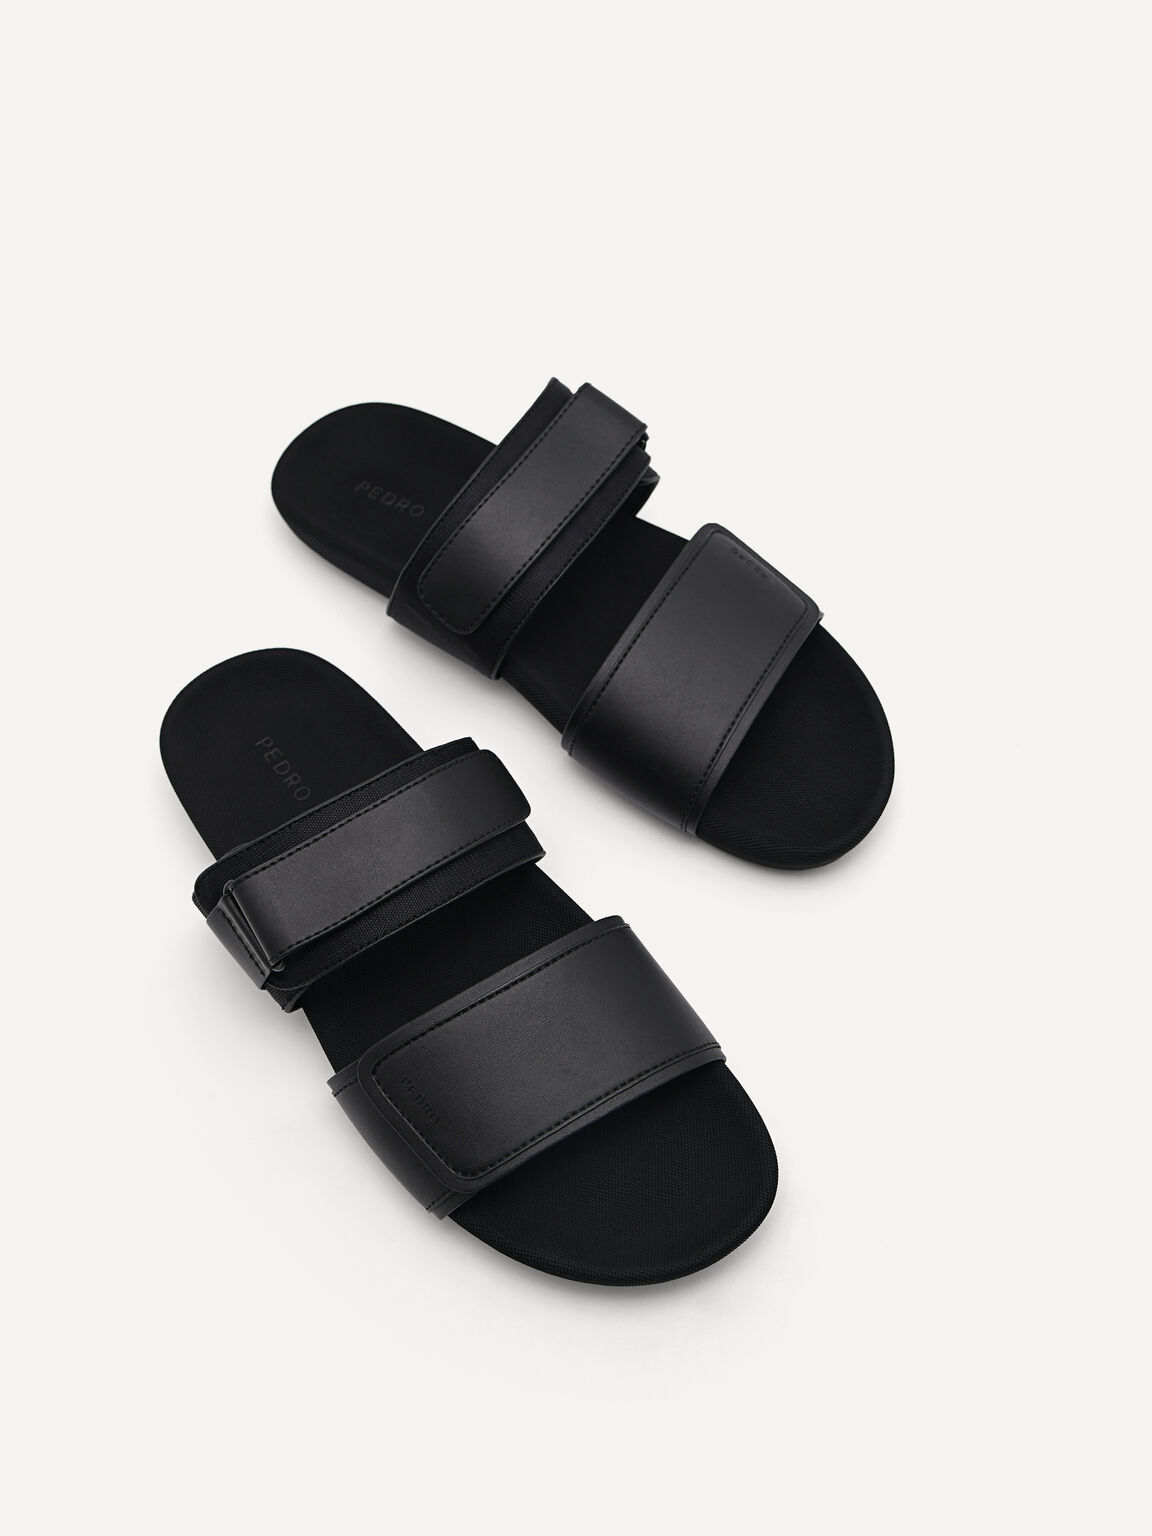 Double Strap Slide Sandals, Black, hi-res